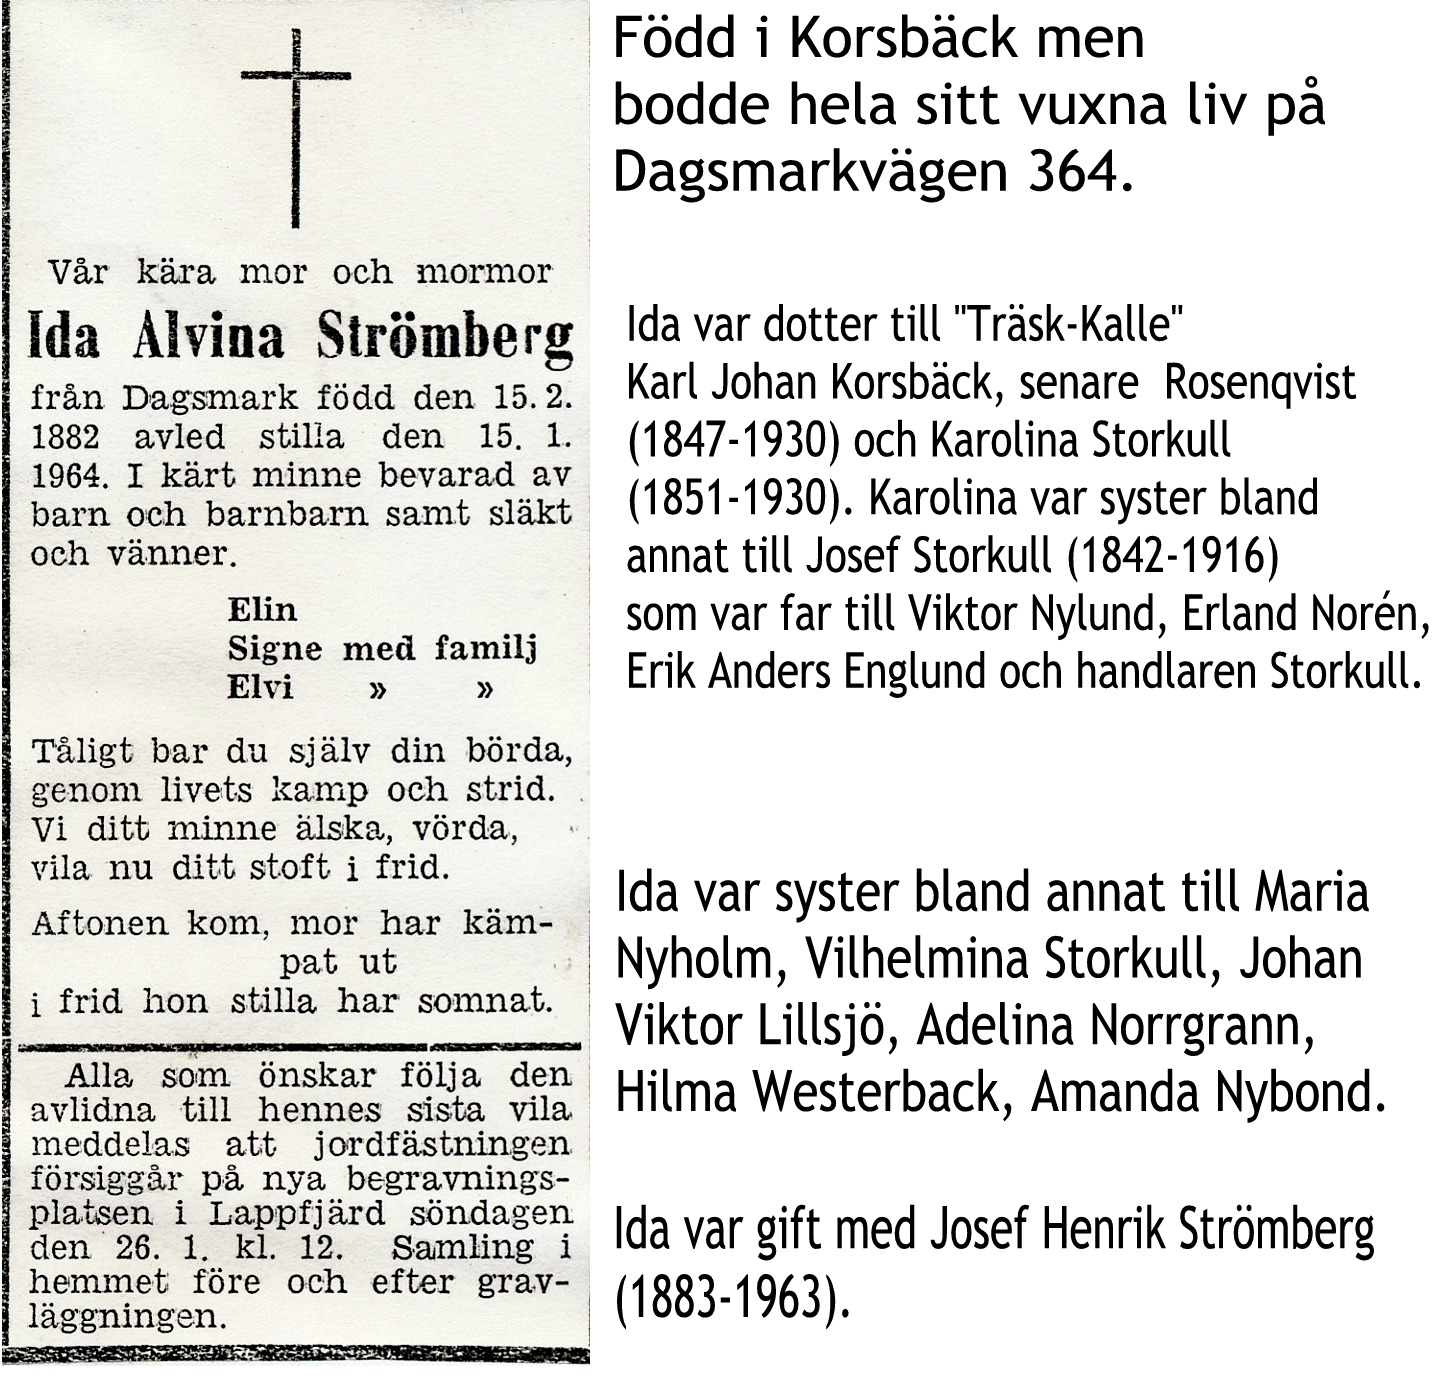 Strömberg Ida Alvina